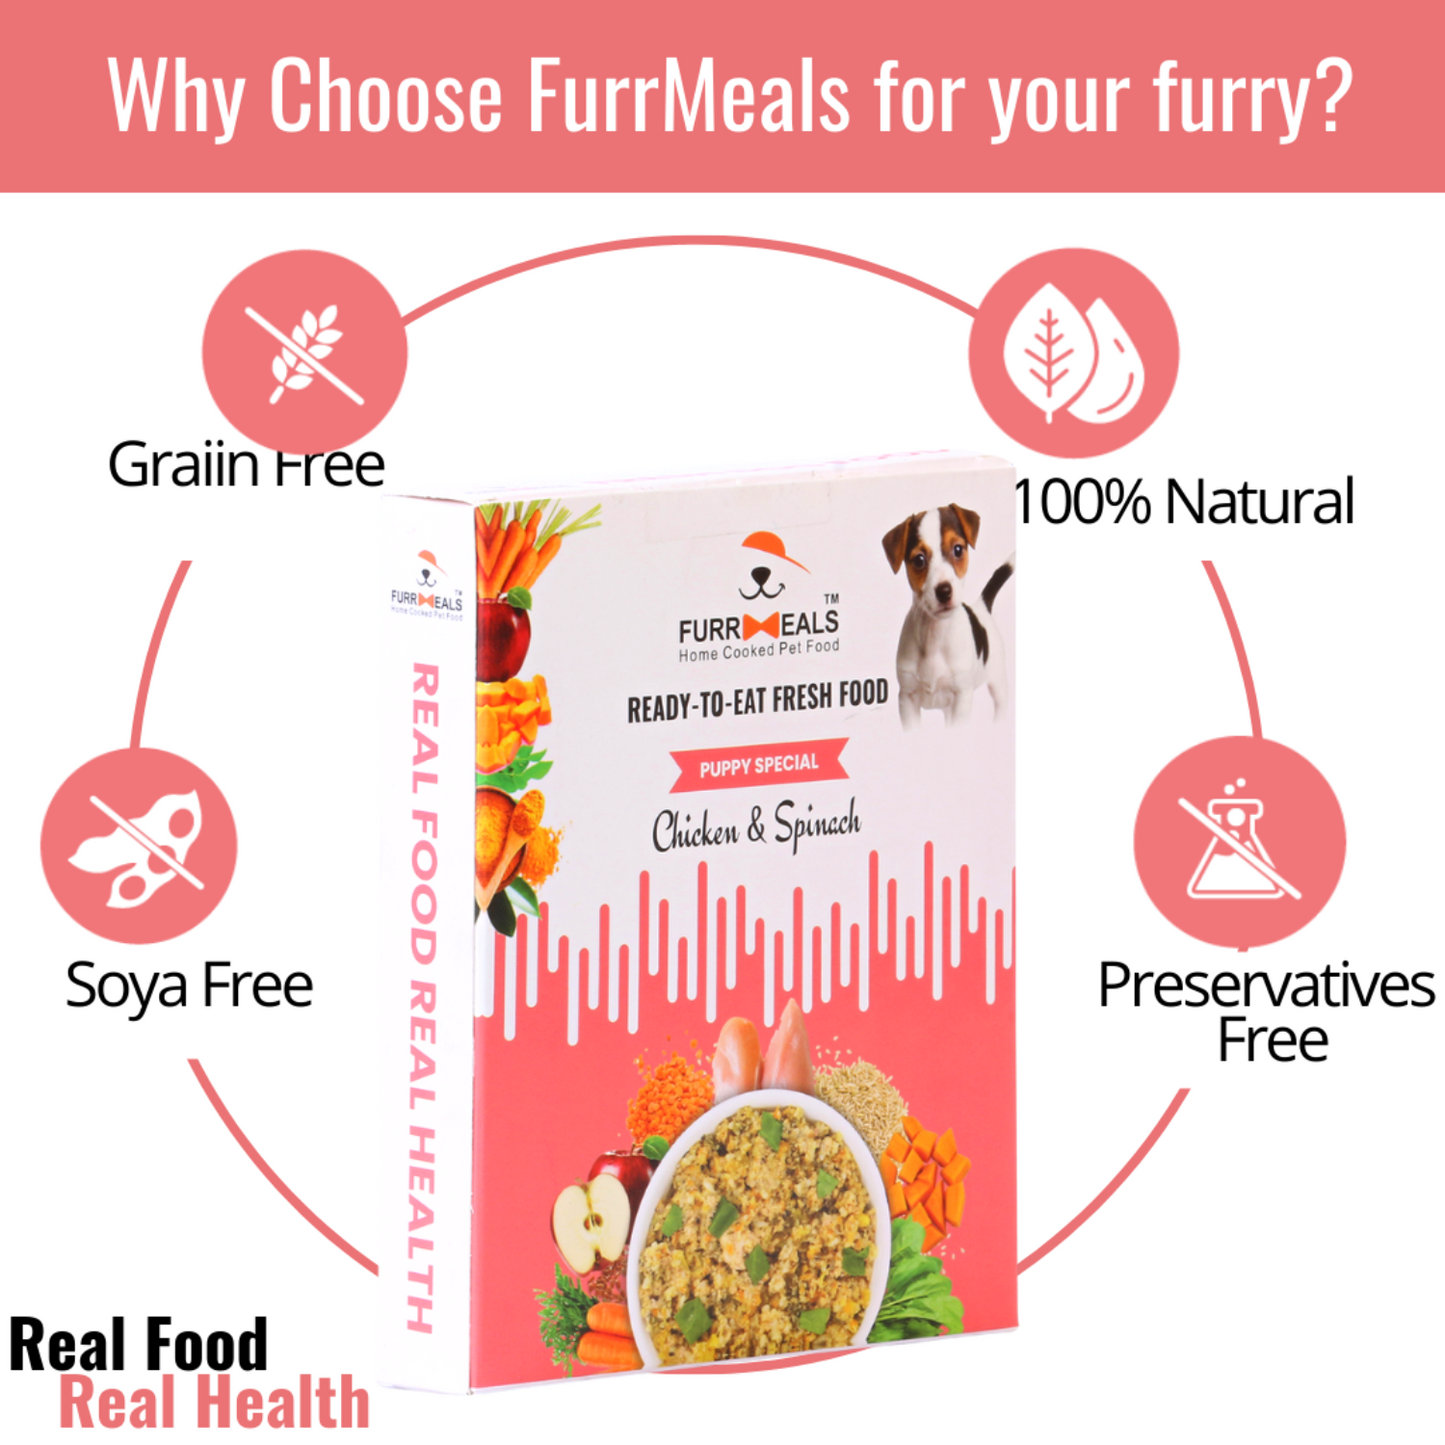 FurrMeals - Puppy Special Chicken & Spinach Ready to Eat (Gluten Free)